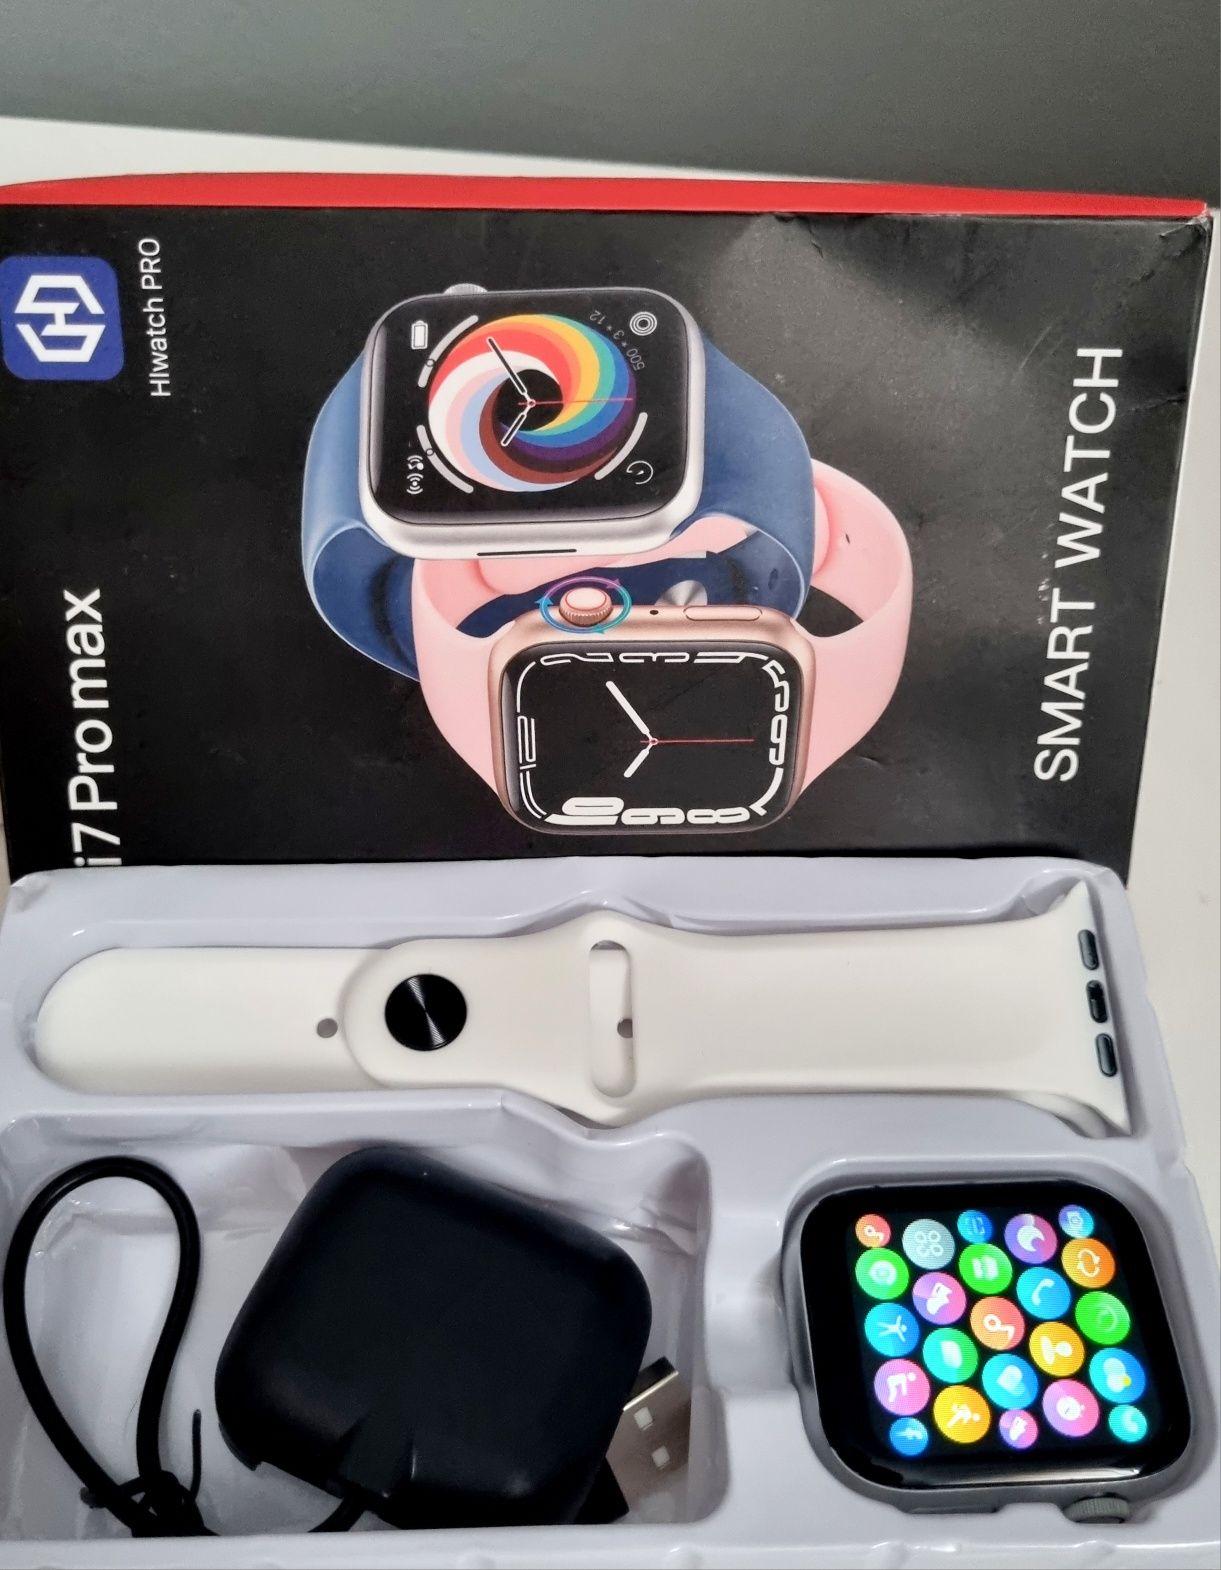 Smartwatch I7 Pro Max